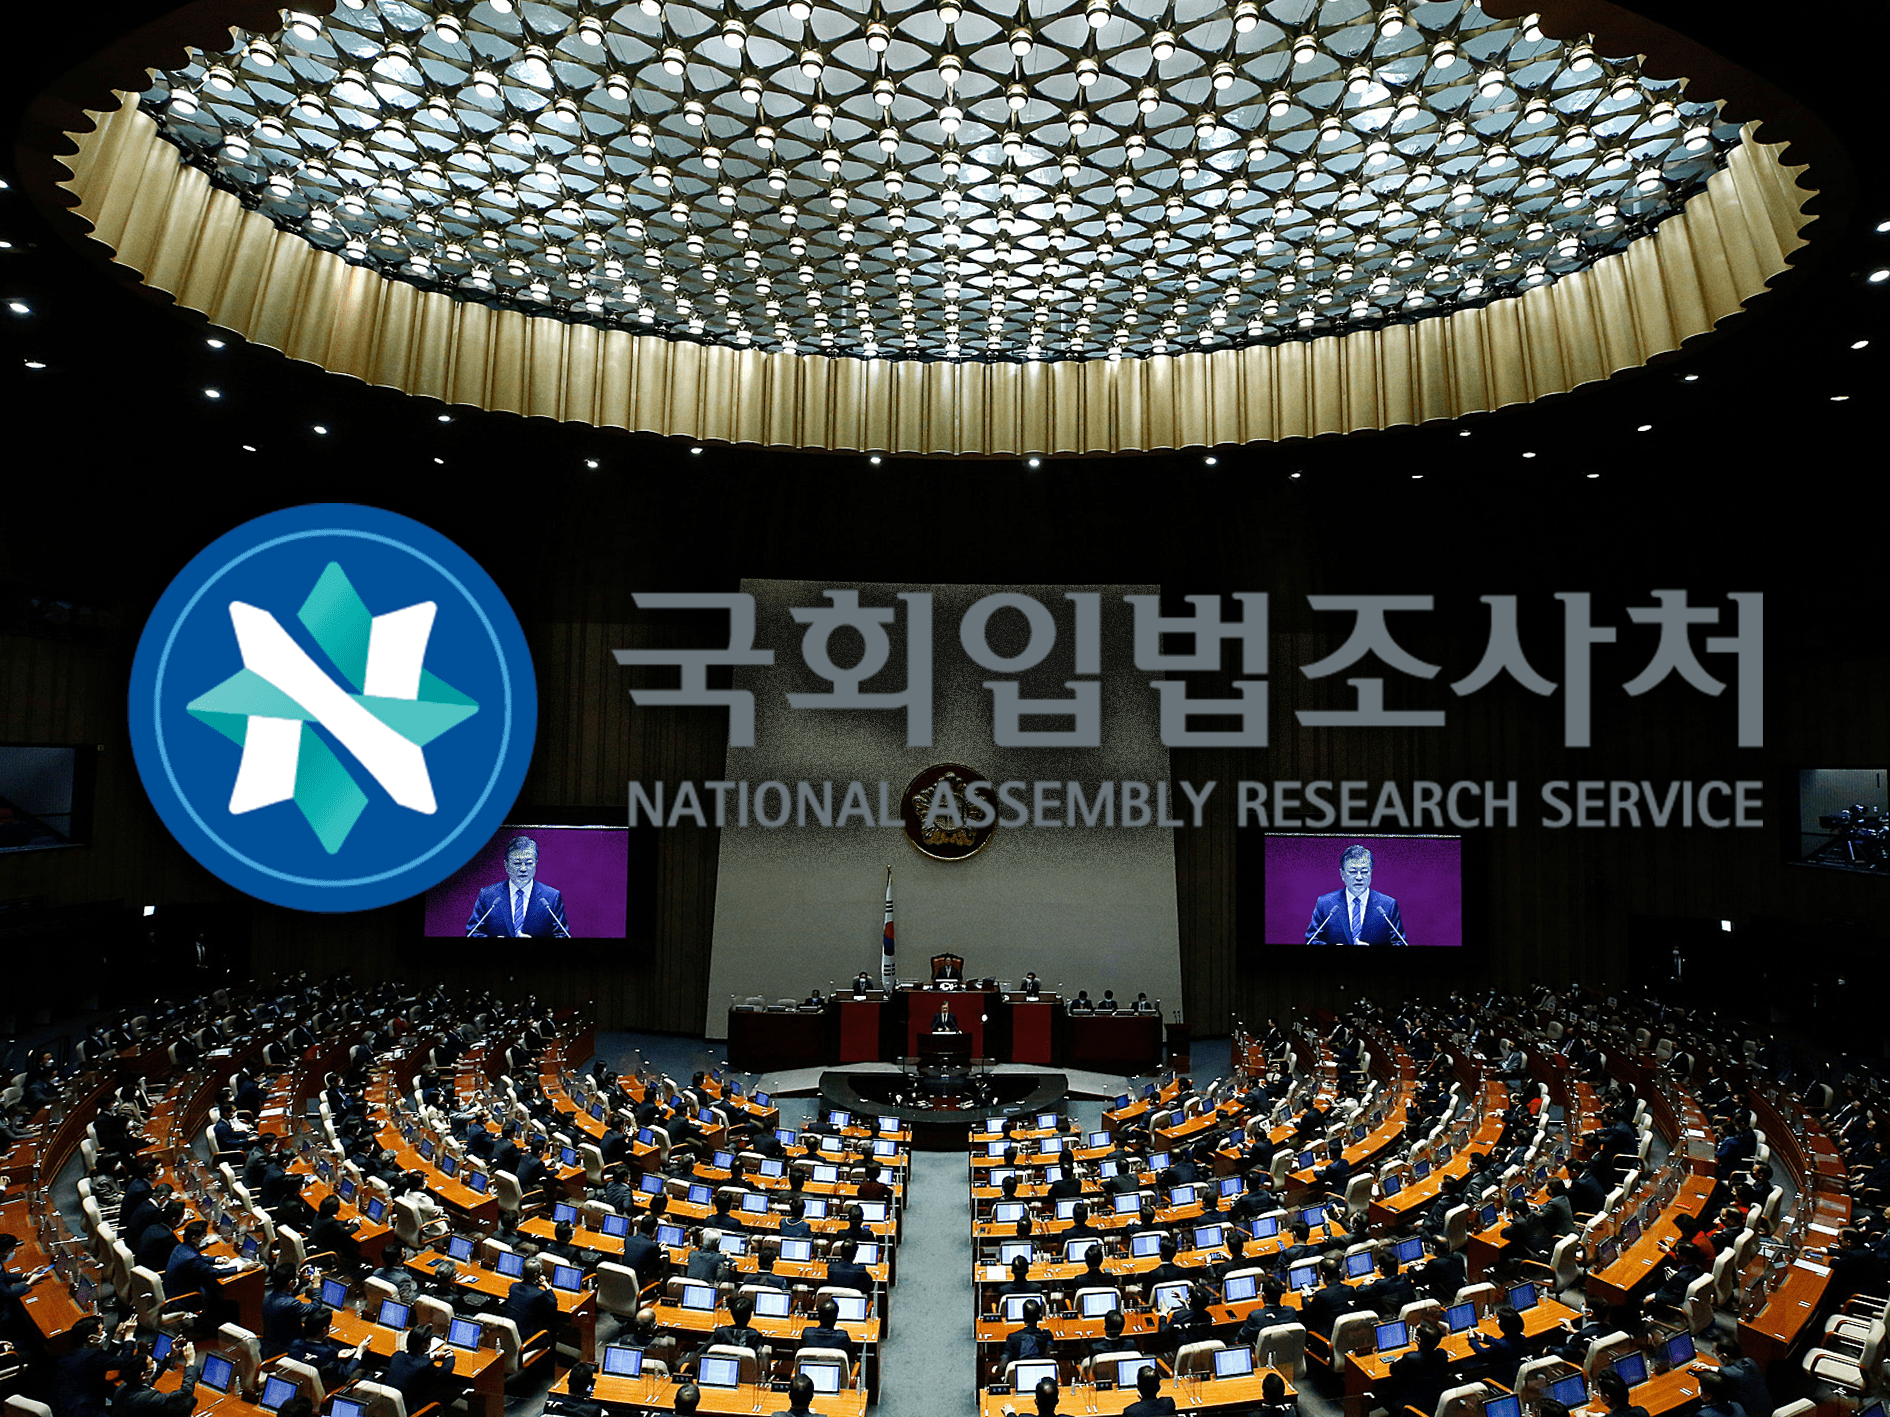 NARS S.Korean presidents plan to raise crypto tax threshold hits road bump